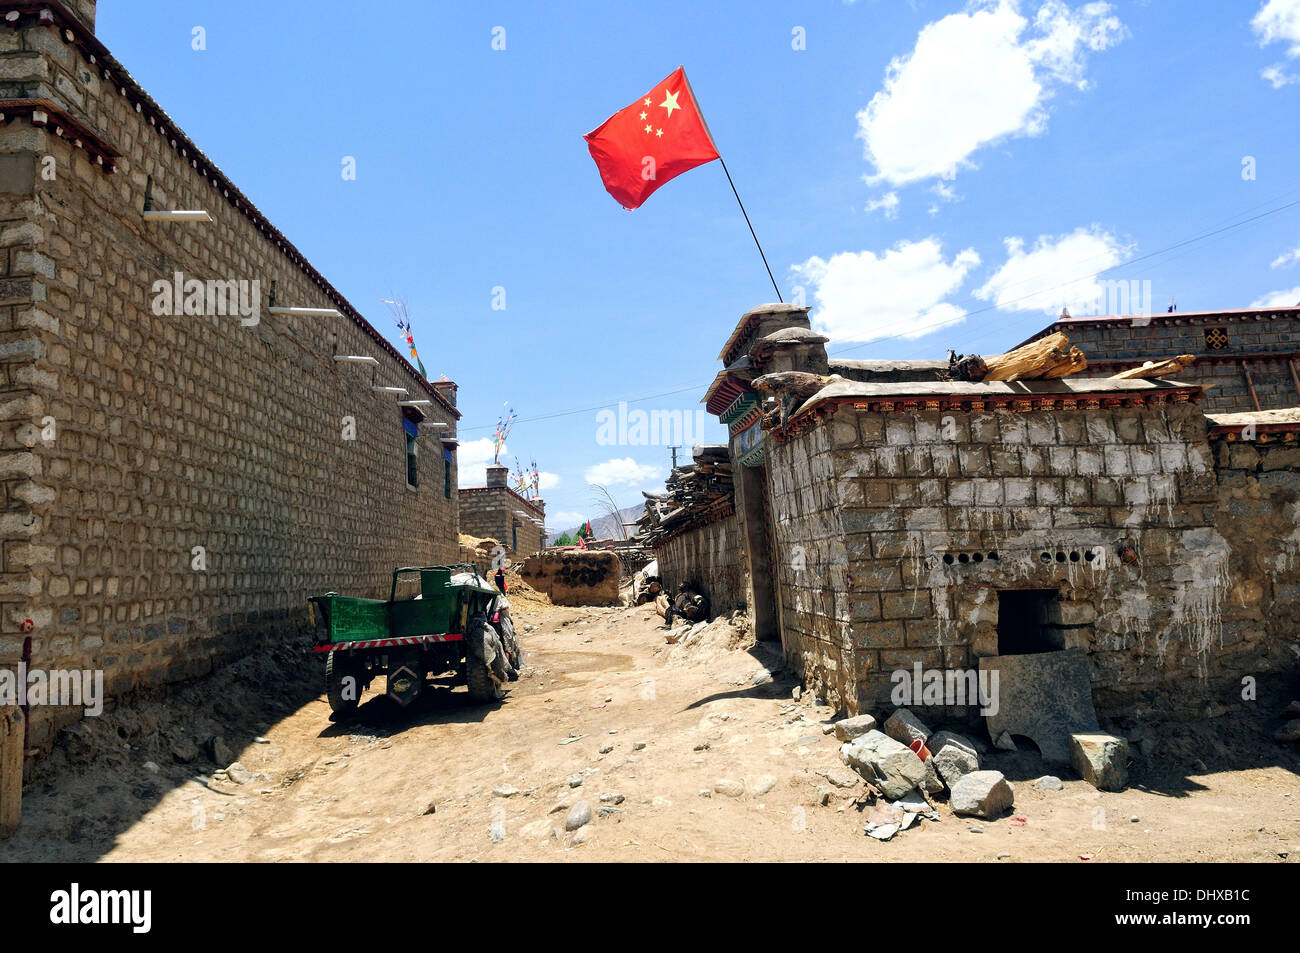 Tibetan life under the flag Stock Photo